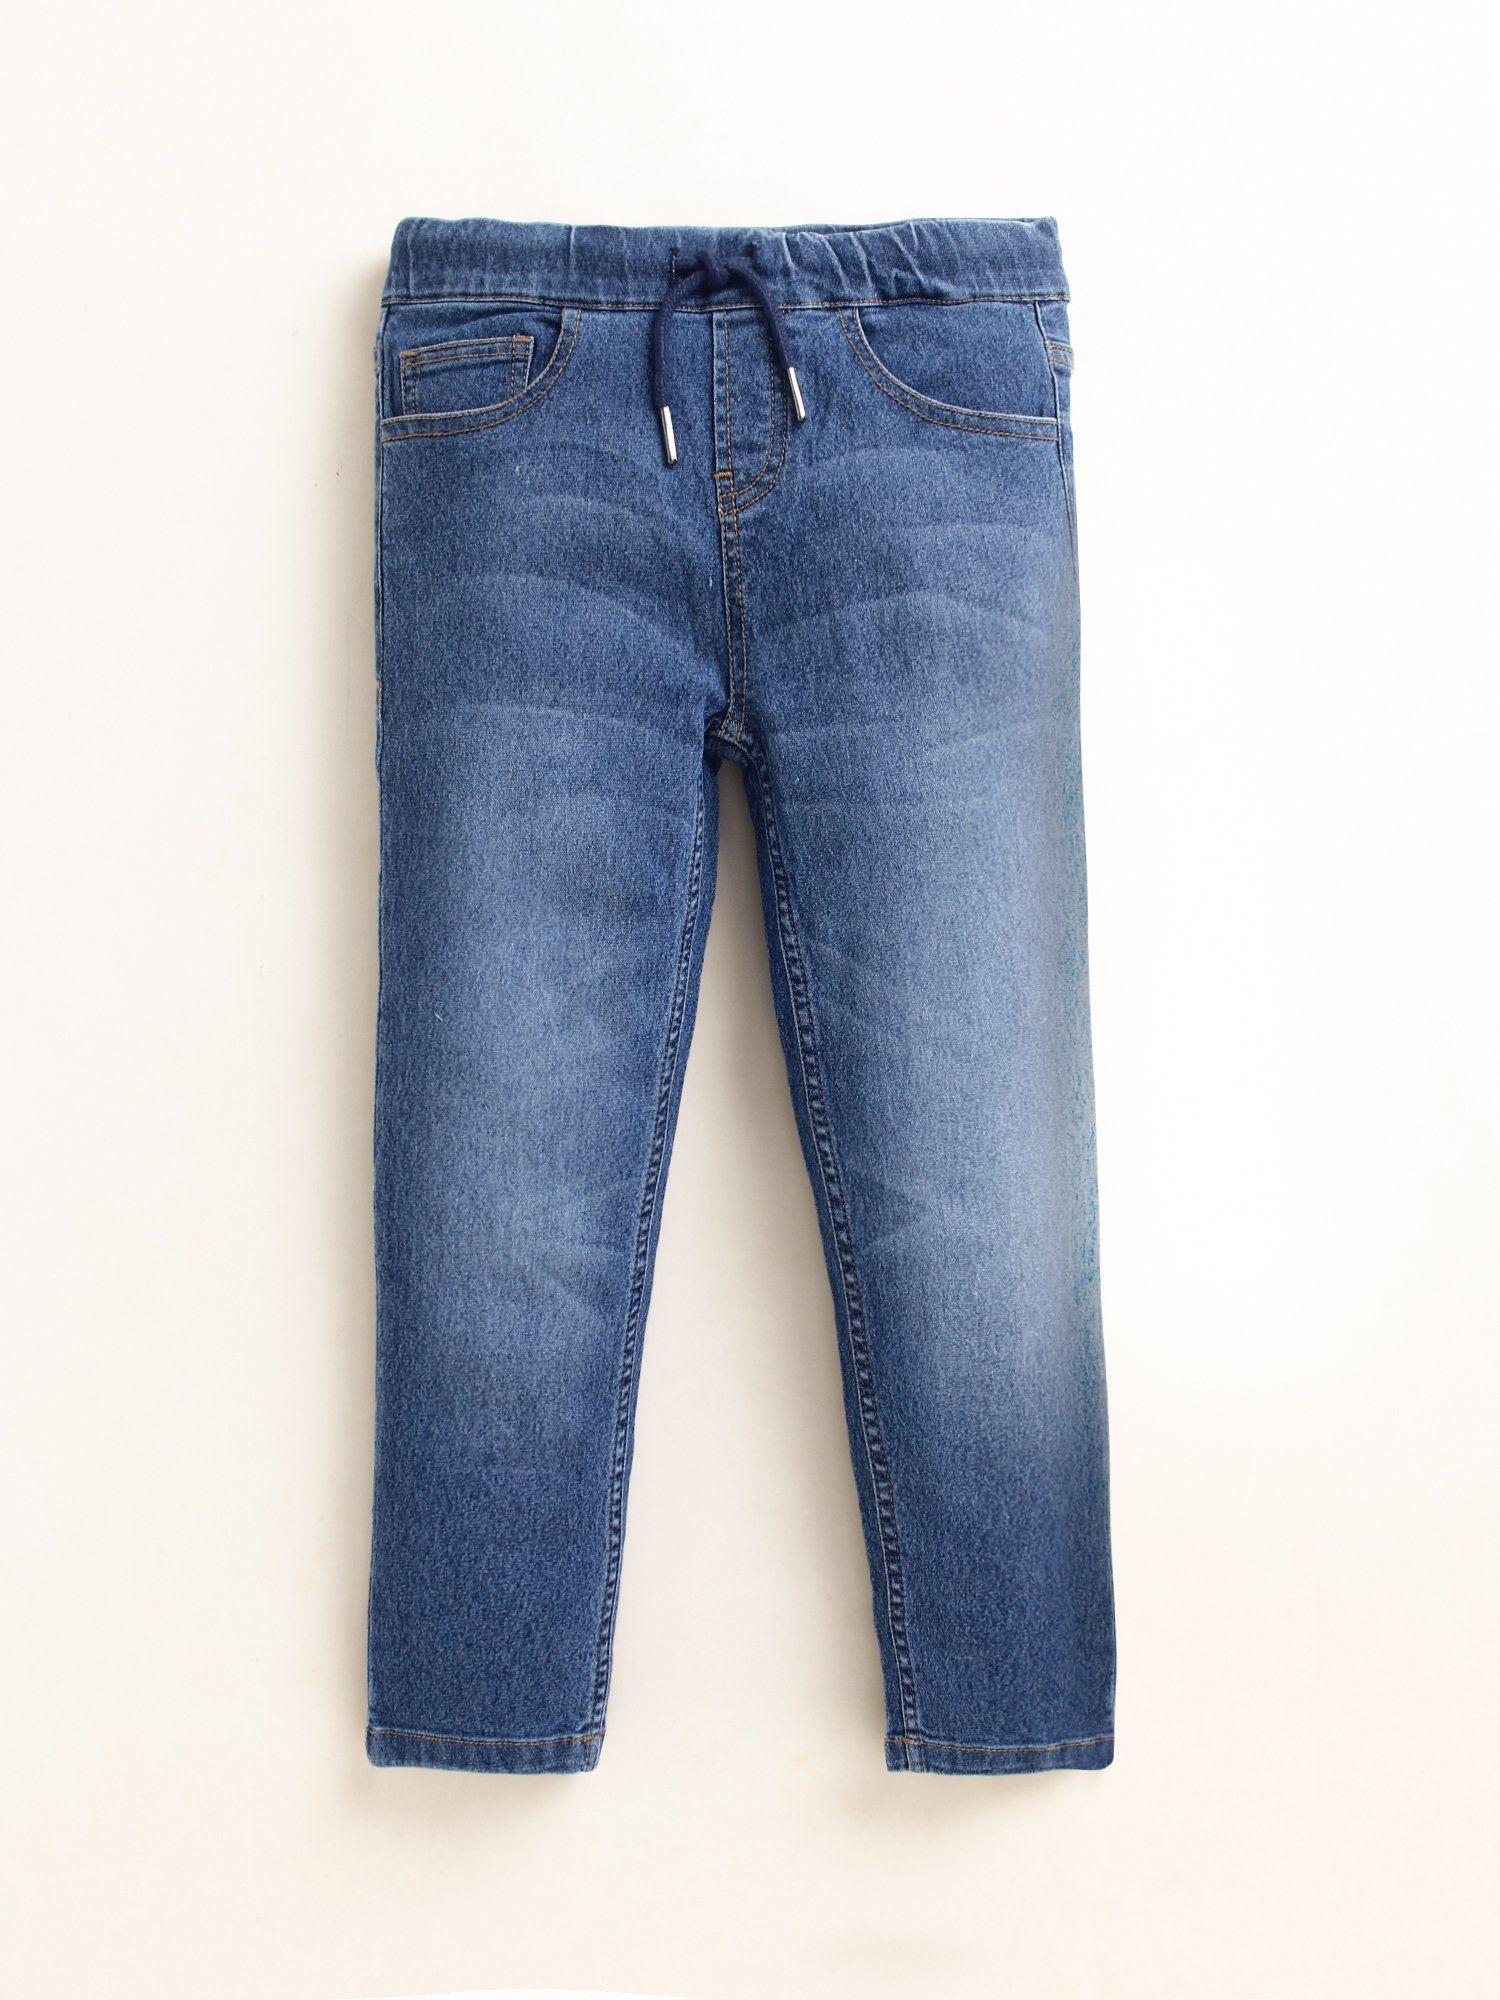 blue-washed-denim-distressed-jeans